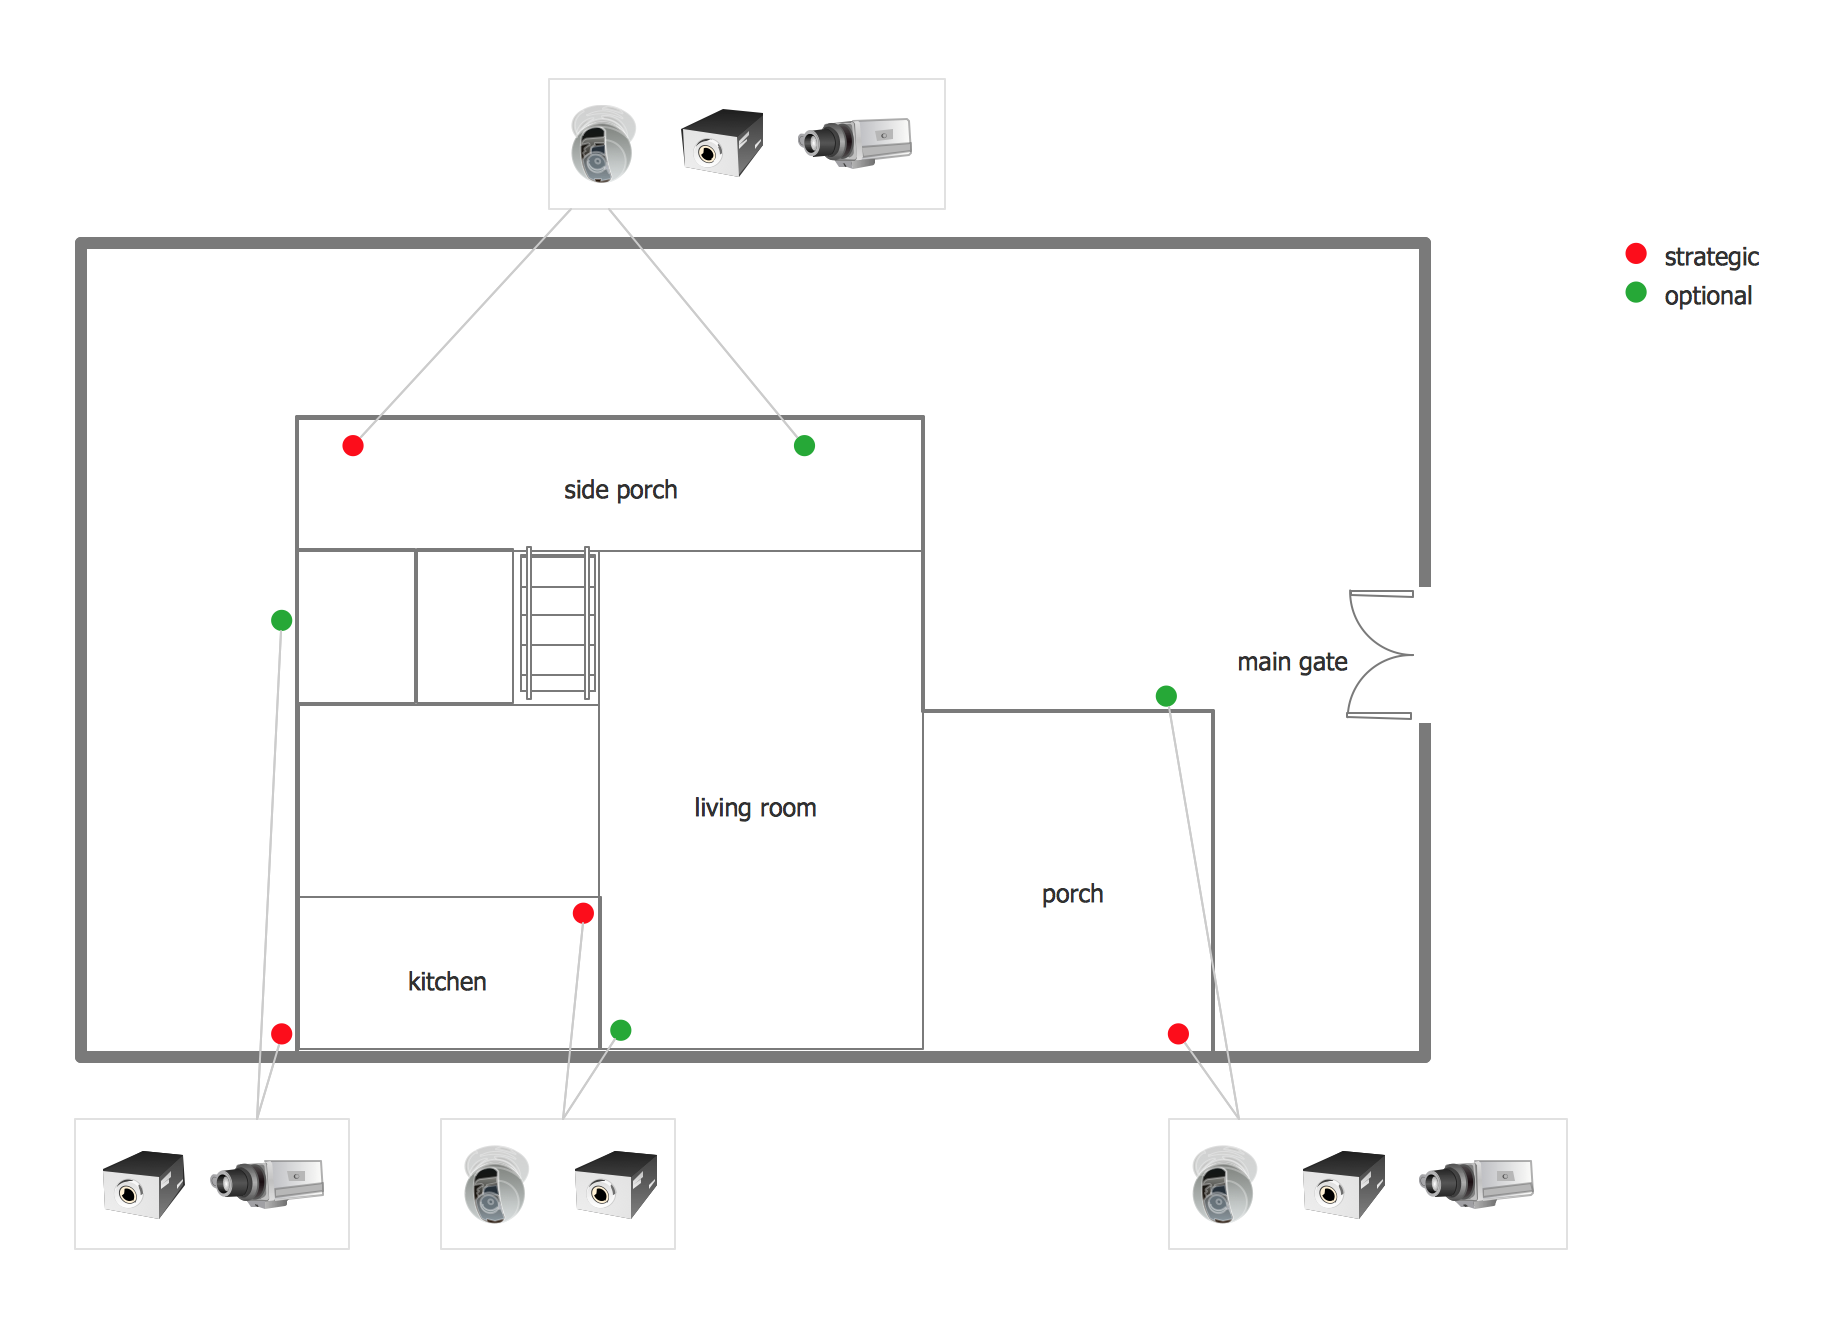 Home CCTV system